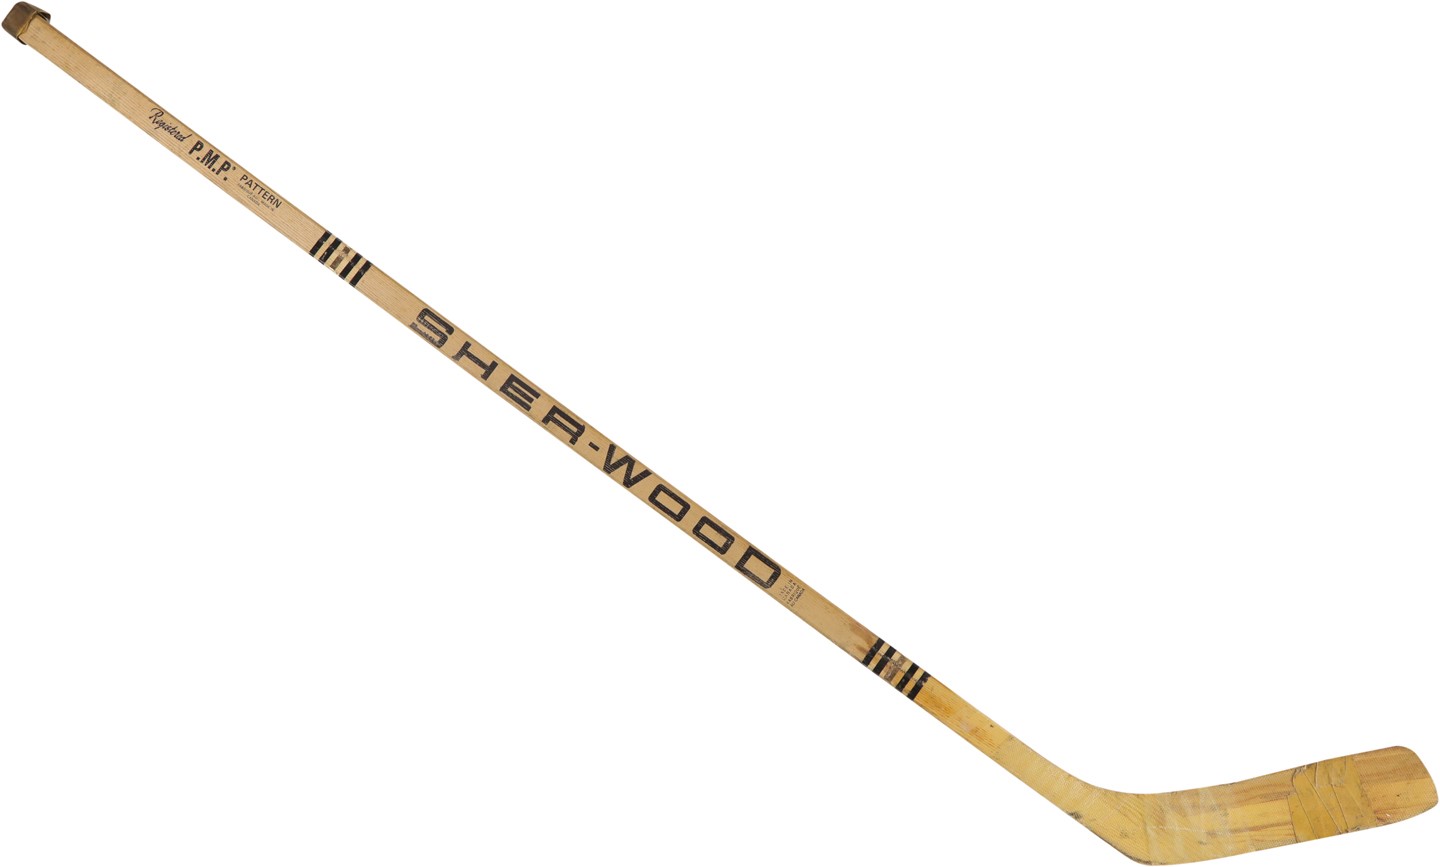 1975 Stanley Cup Finals Game 6 Sticks - 1975 Bobby Clarke Philadelphia Flyers Stanley Cup Finals Game 6 Used Stick